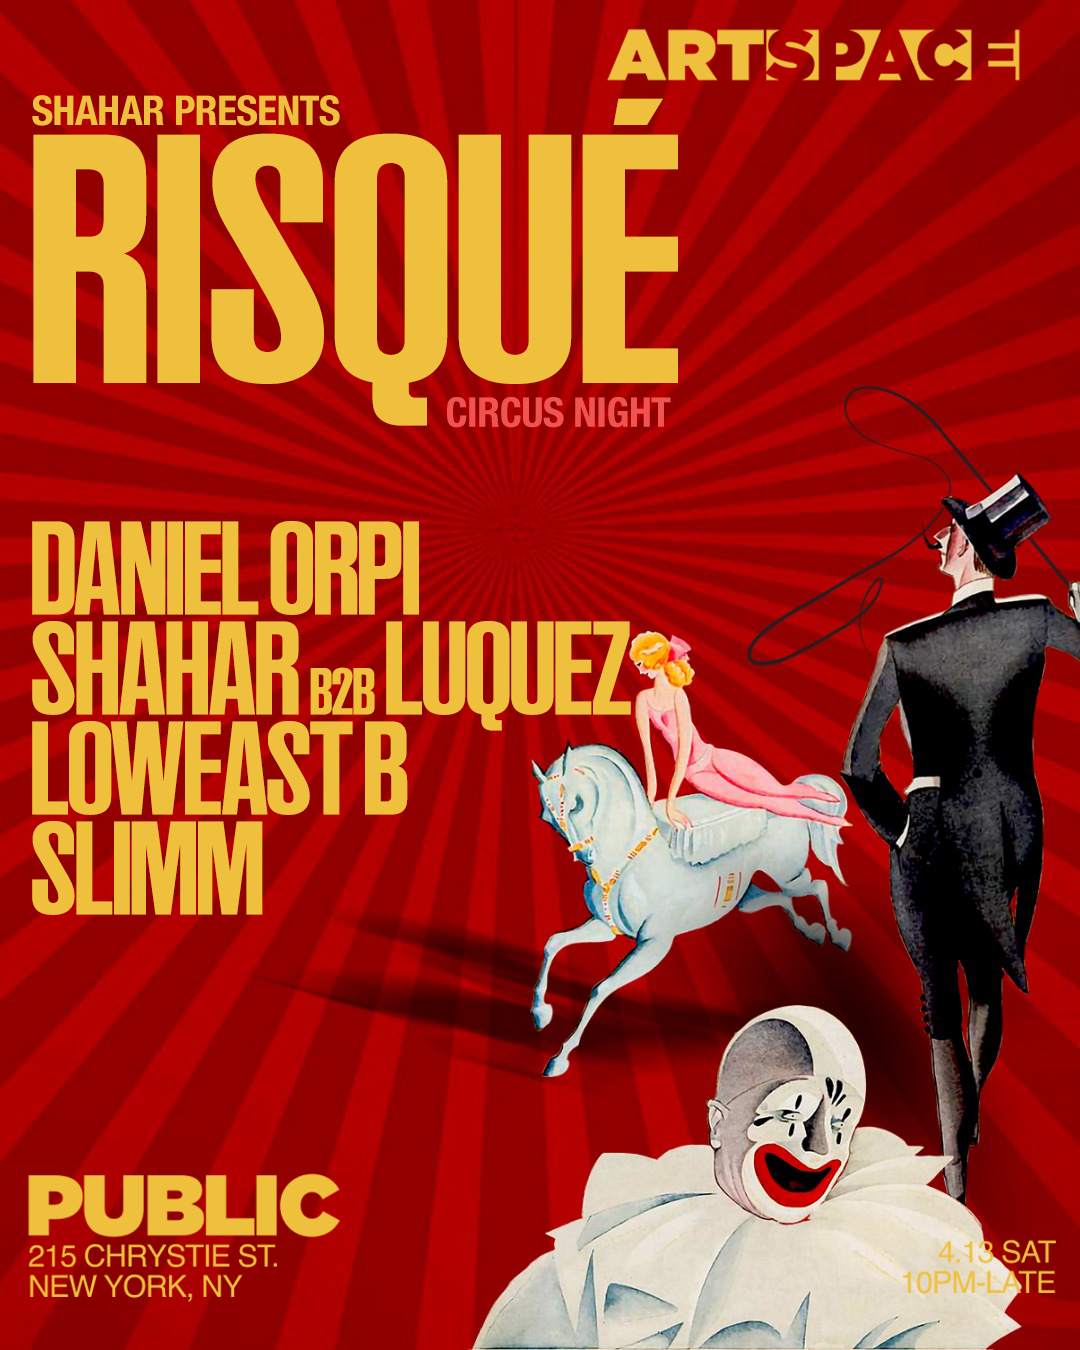 Shahar presents Risqué circus night W Daniel Orpi - Página frontal